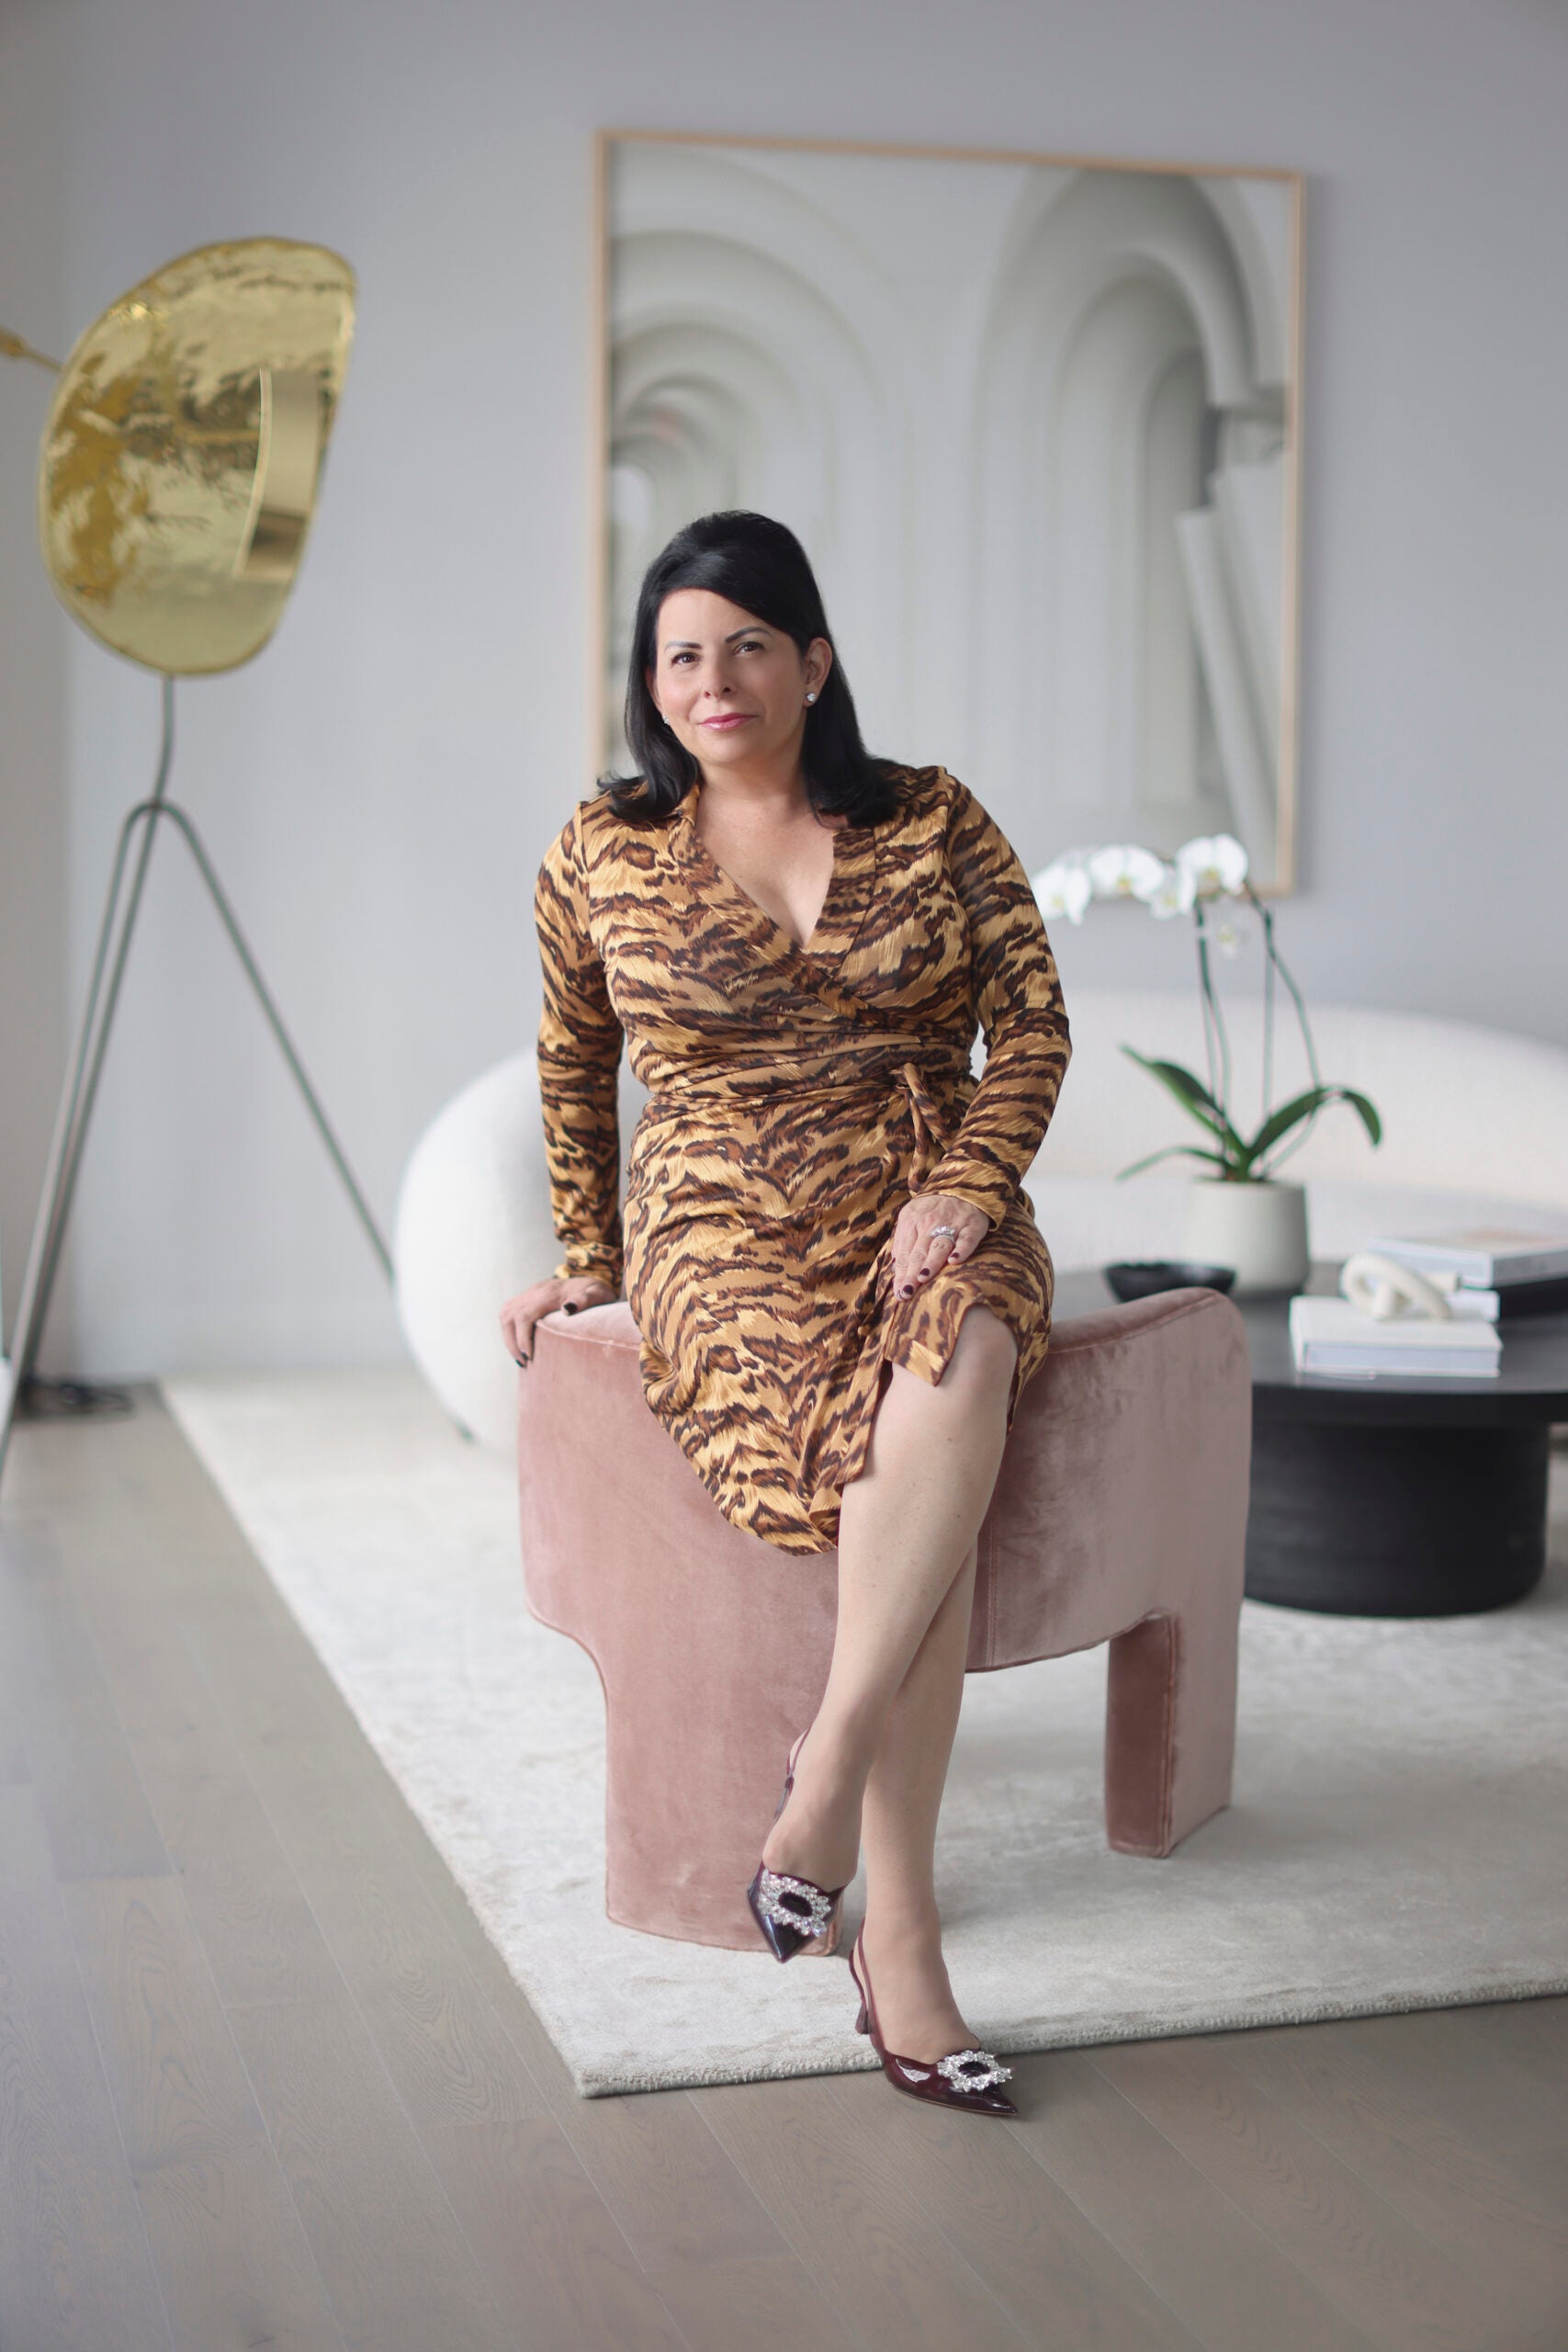 Lisa Rainis in a living room wearing tiger print dress